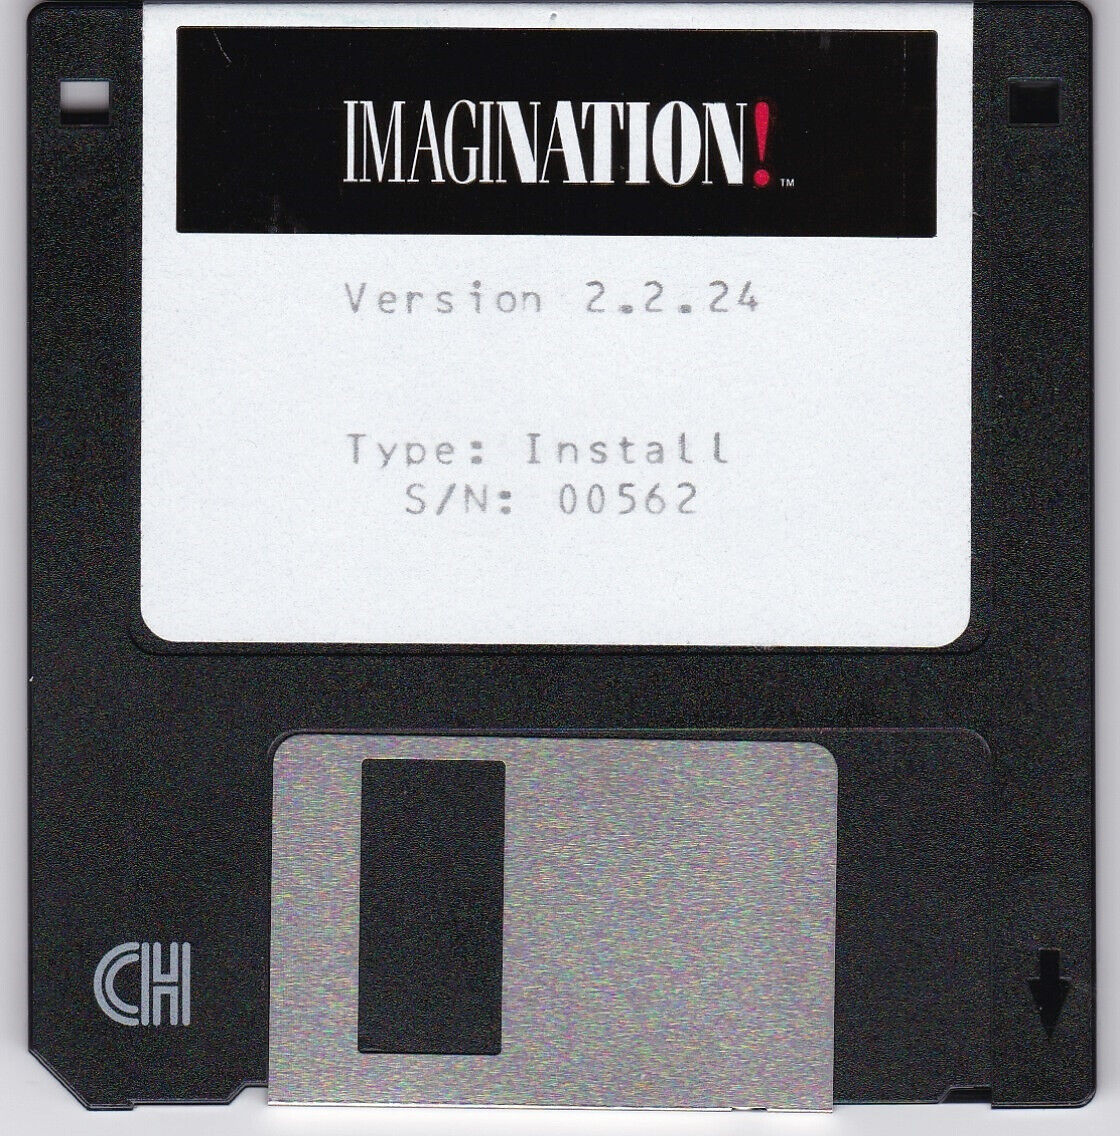 Vintage Imagination Version 2.2.24 by The ImagiNation Network - 3.5